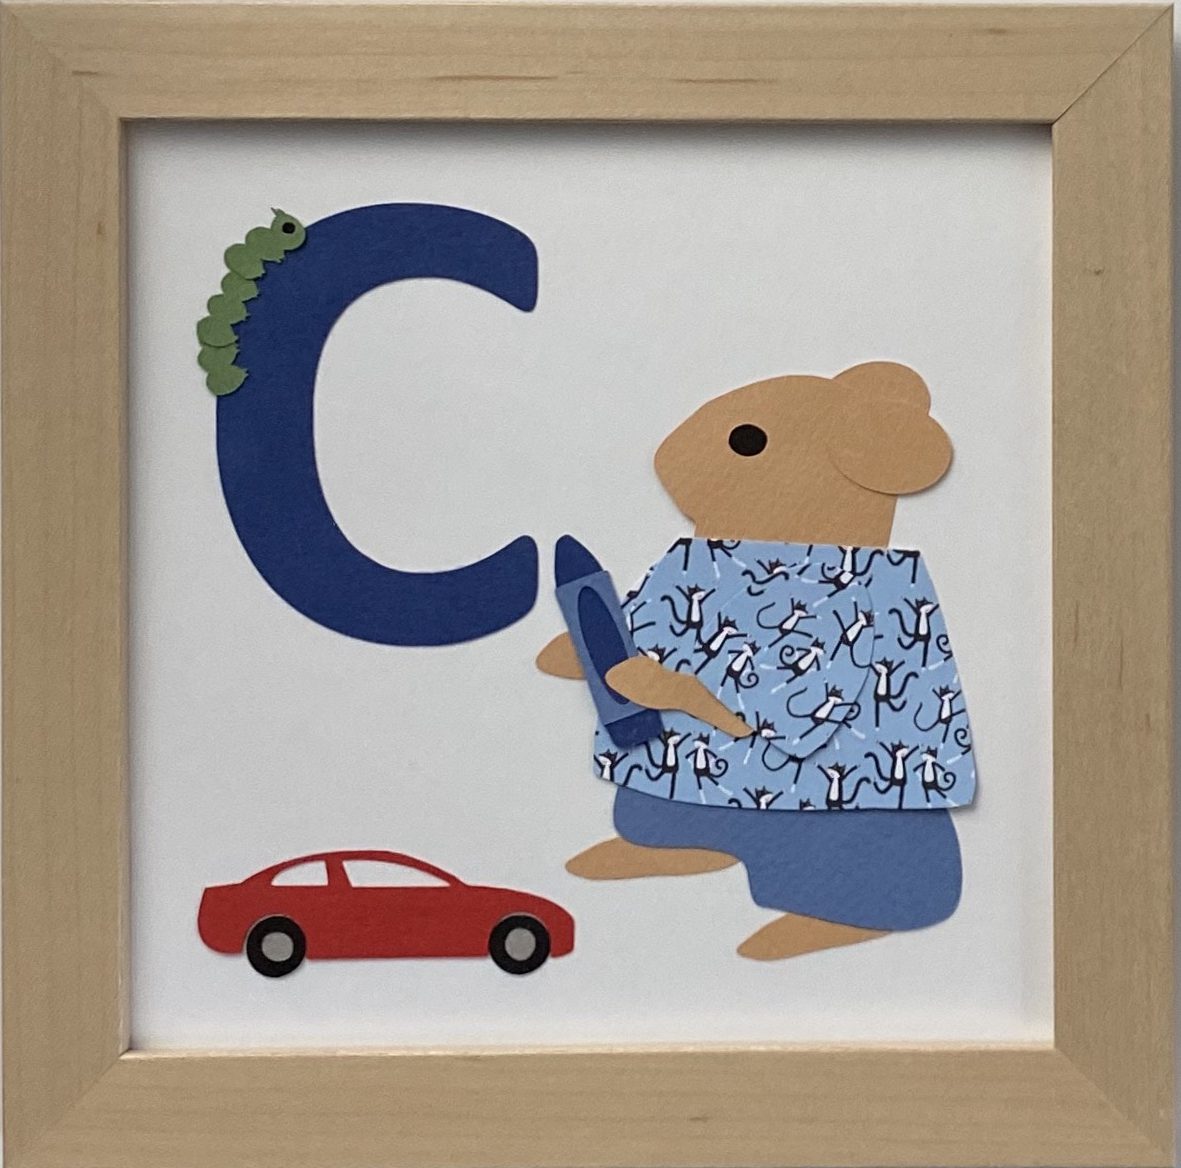 C initial sign - Hamster with crayon, caterpillar, and car